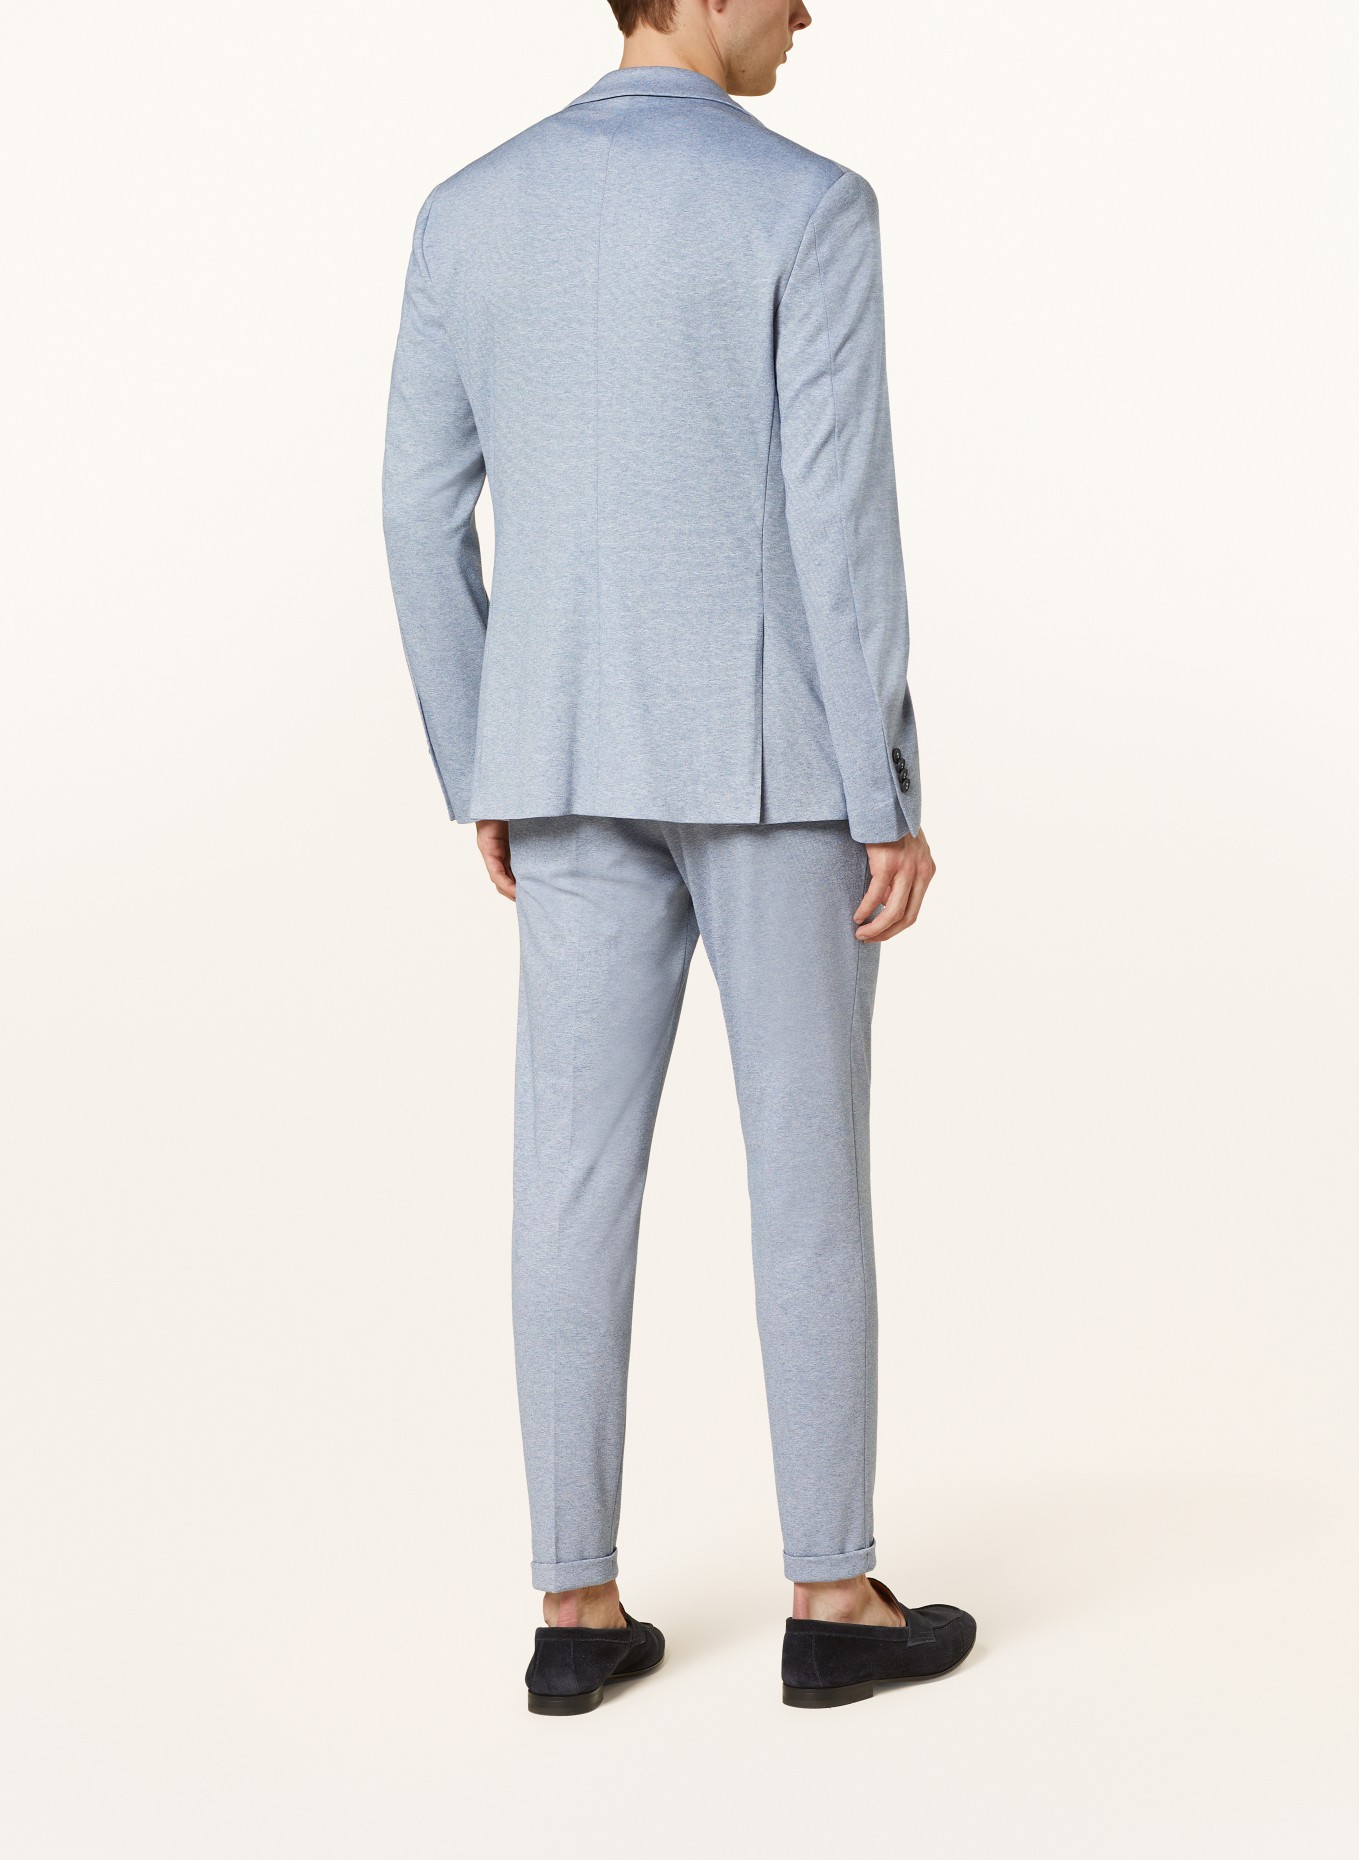 CINQUE Anzugsakko CIDATI Extra Slim Fit aus Jersey, Farbe: 68 dunkelblau (Bild 3)